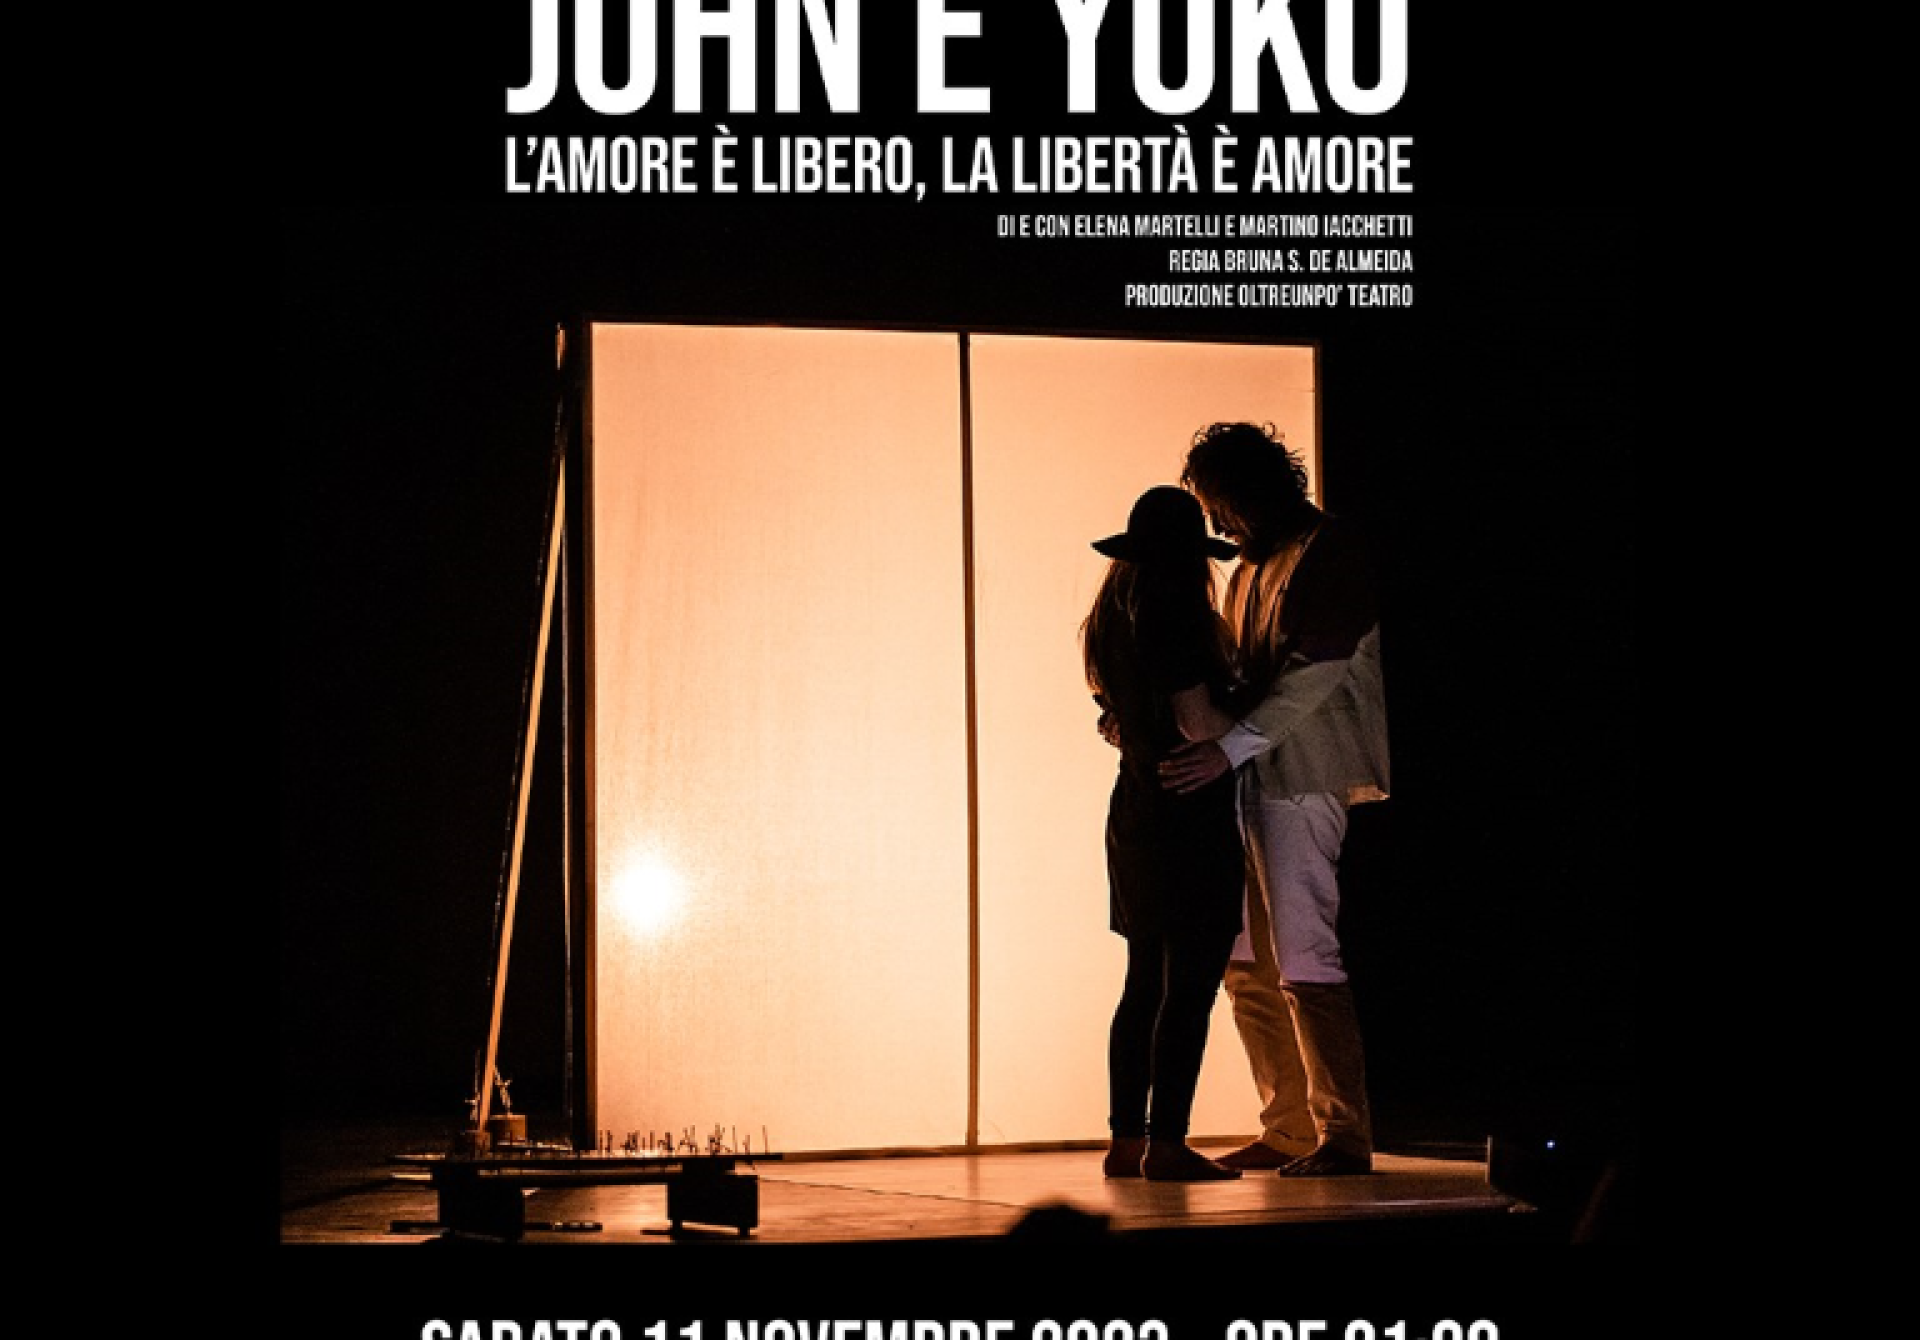 John e Yoko “L’amore è libero, la libertà è amore”